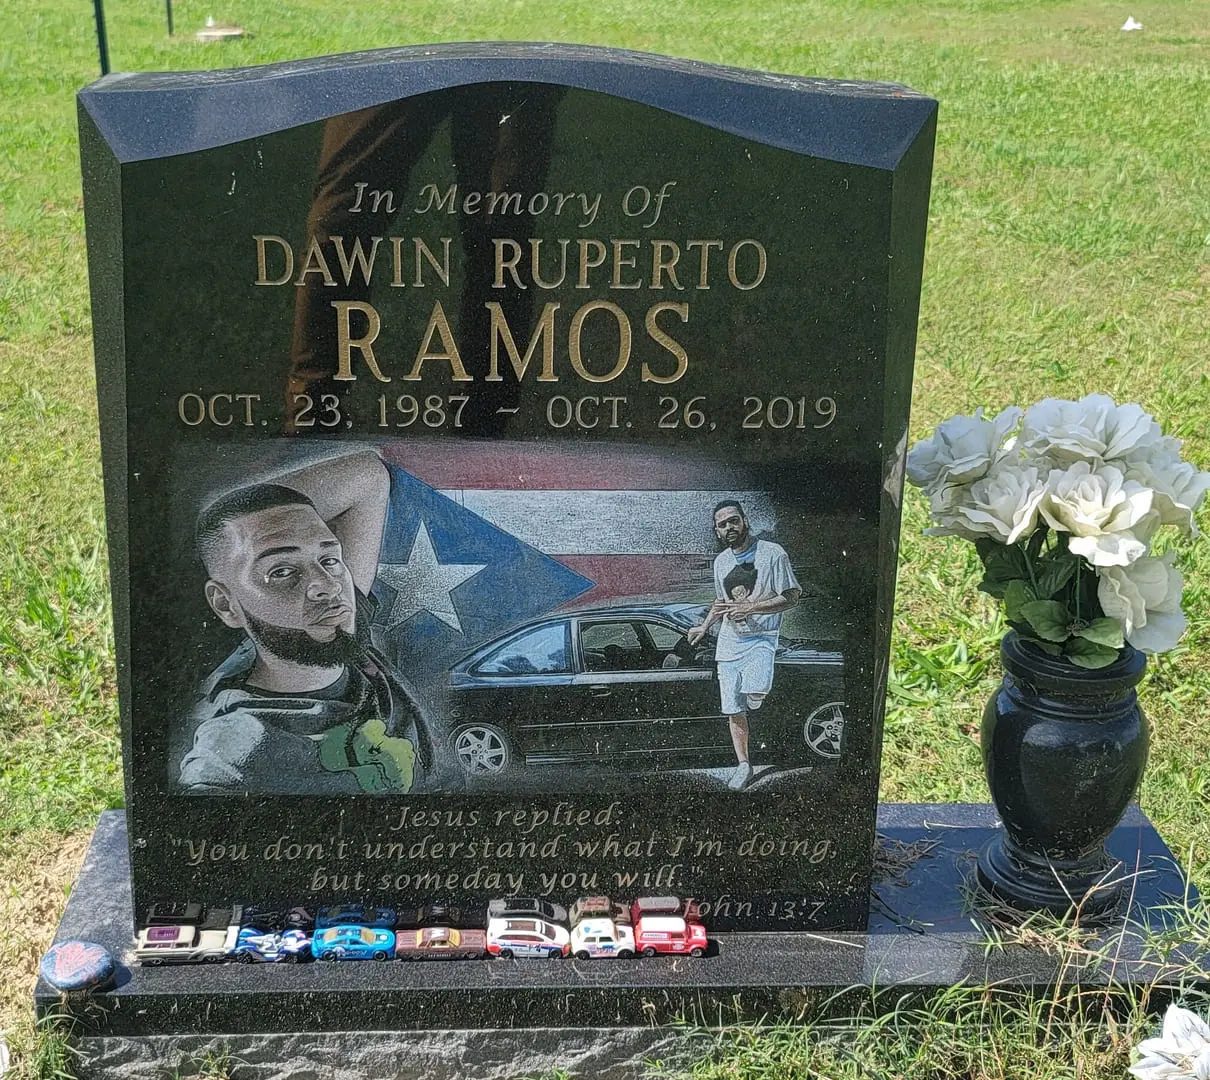 Dawin Ruperto Ramos Memorial Slab With Portrait